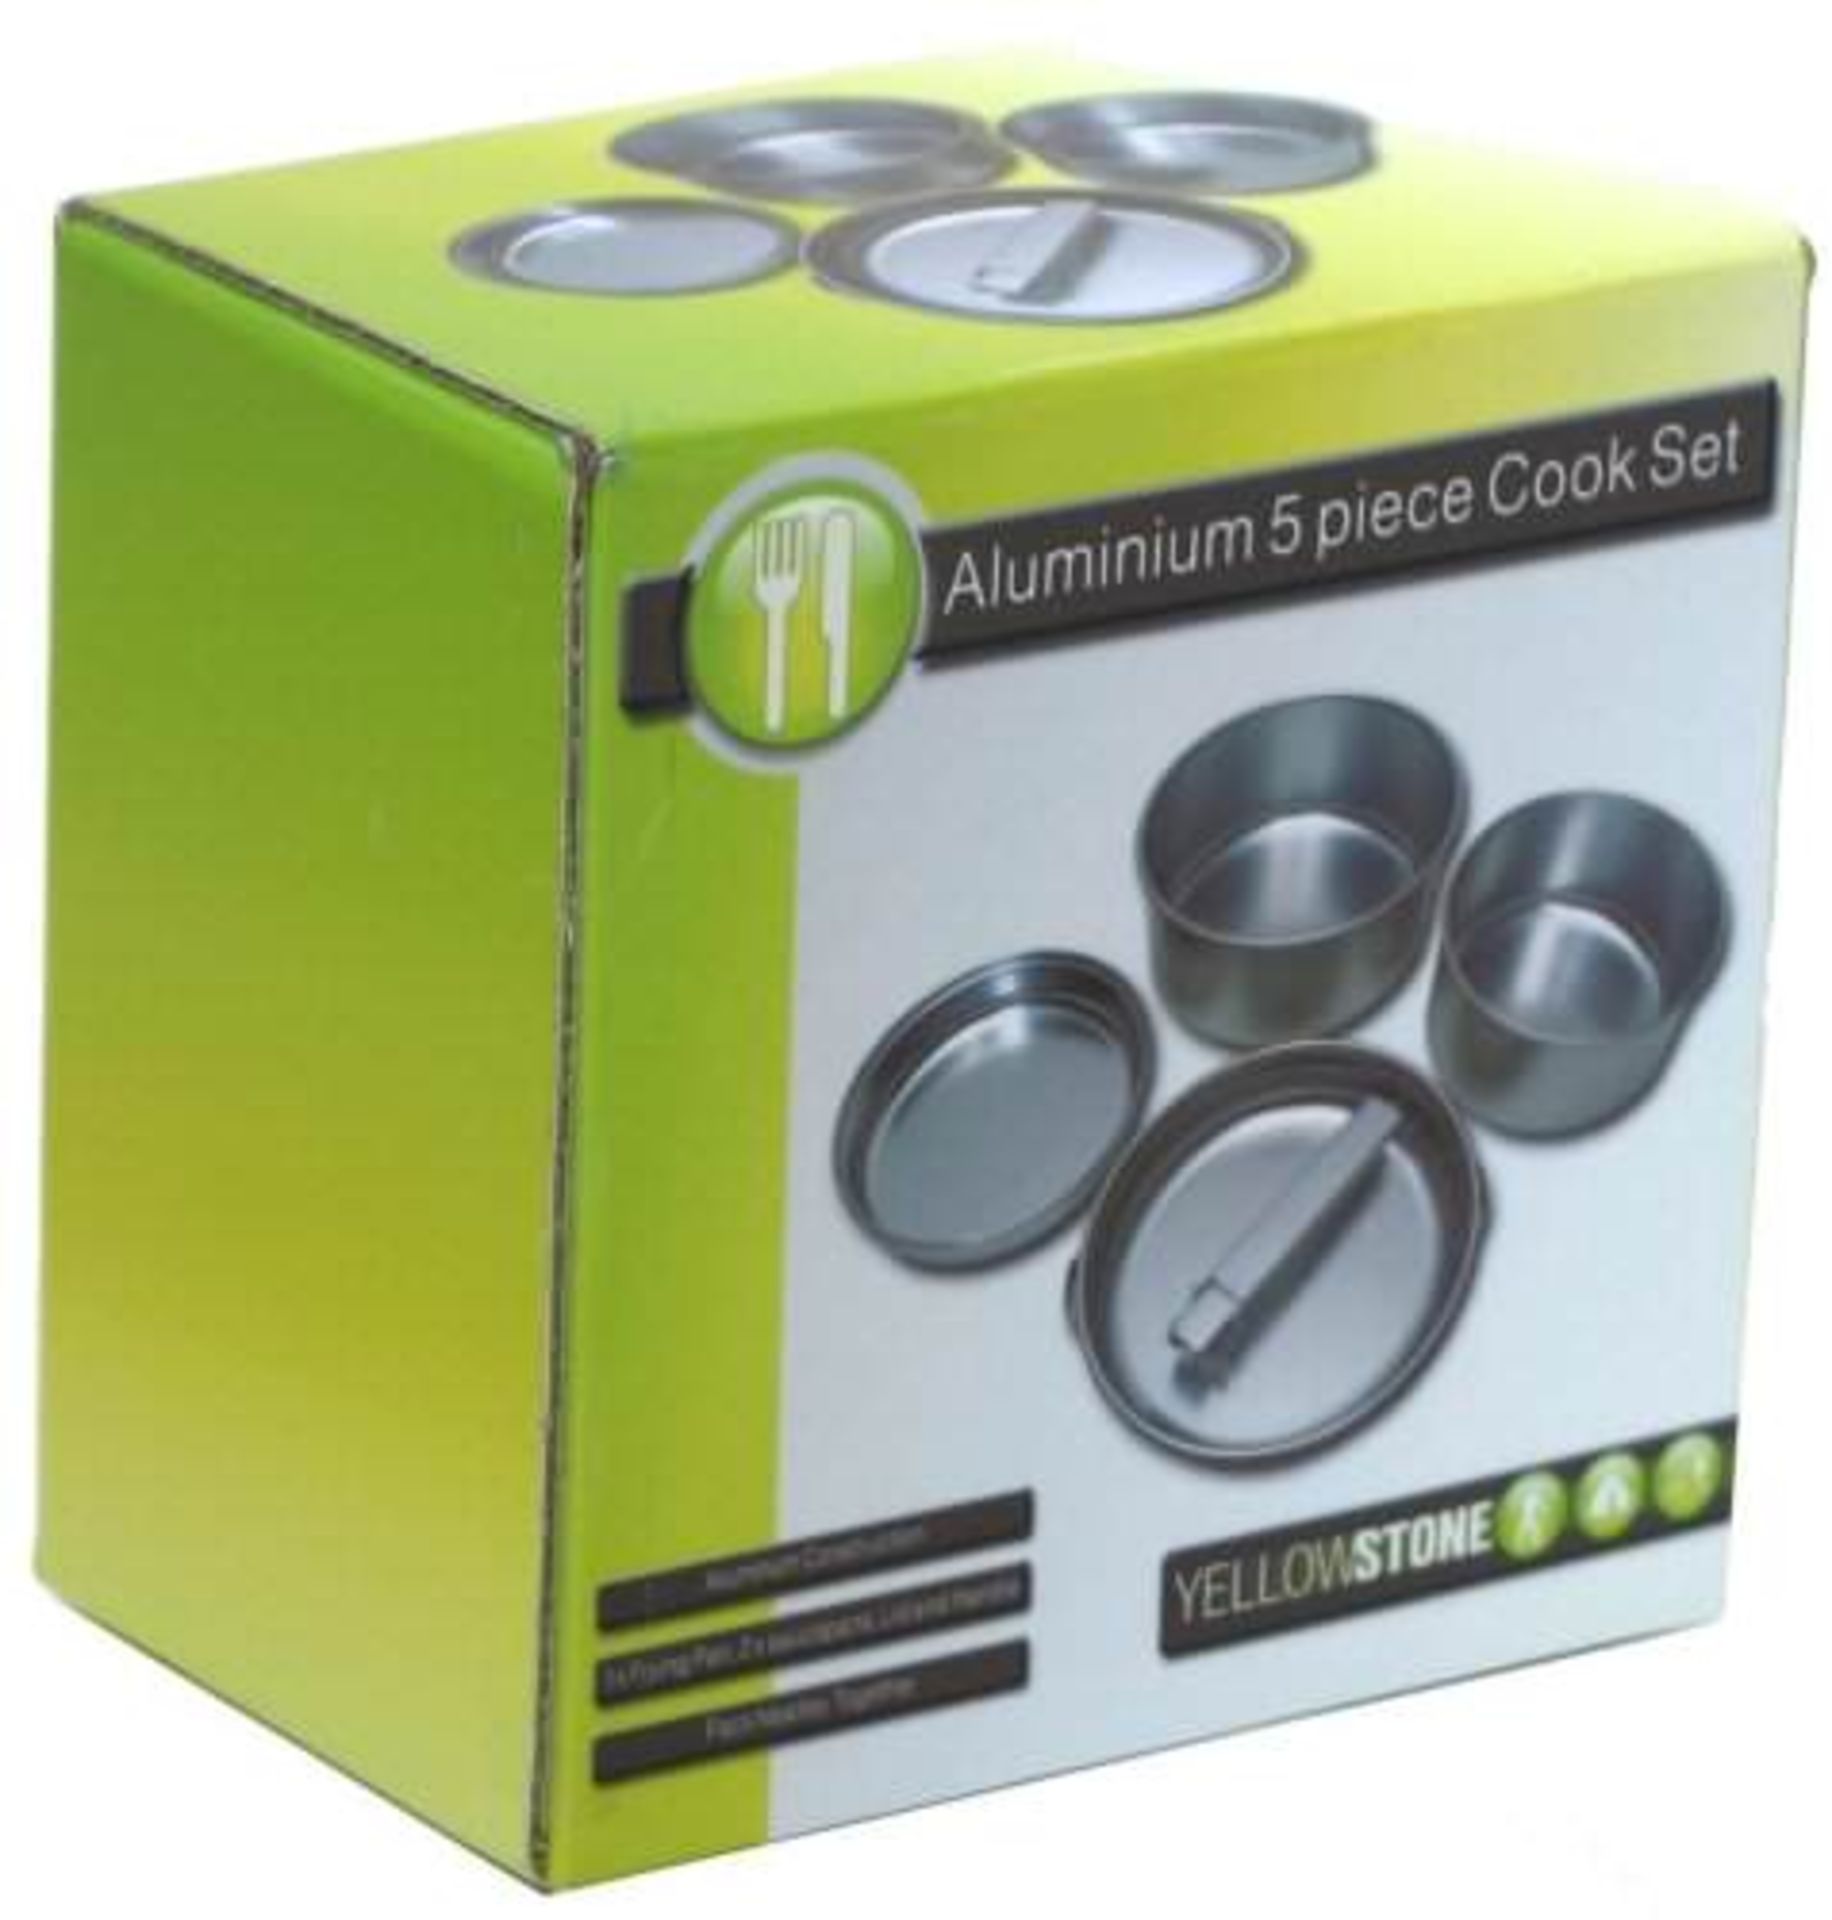 V *TRADE QTY* Brand New 5Pce Aluminium Cook Set Inc 2 Saucepans 1 Frying Pan Etc X 7 YOUR BID - Image 2 of 2